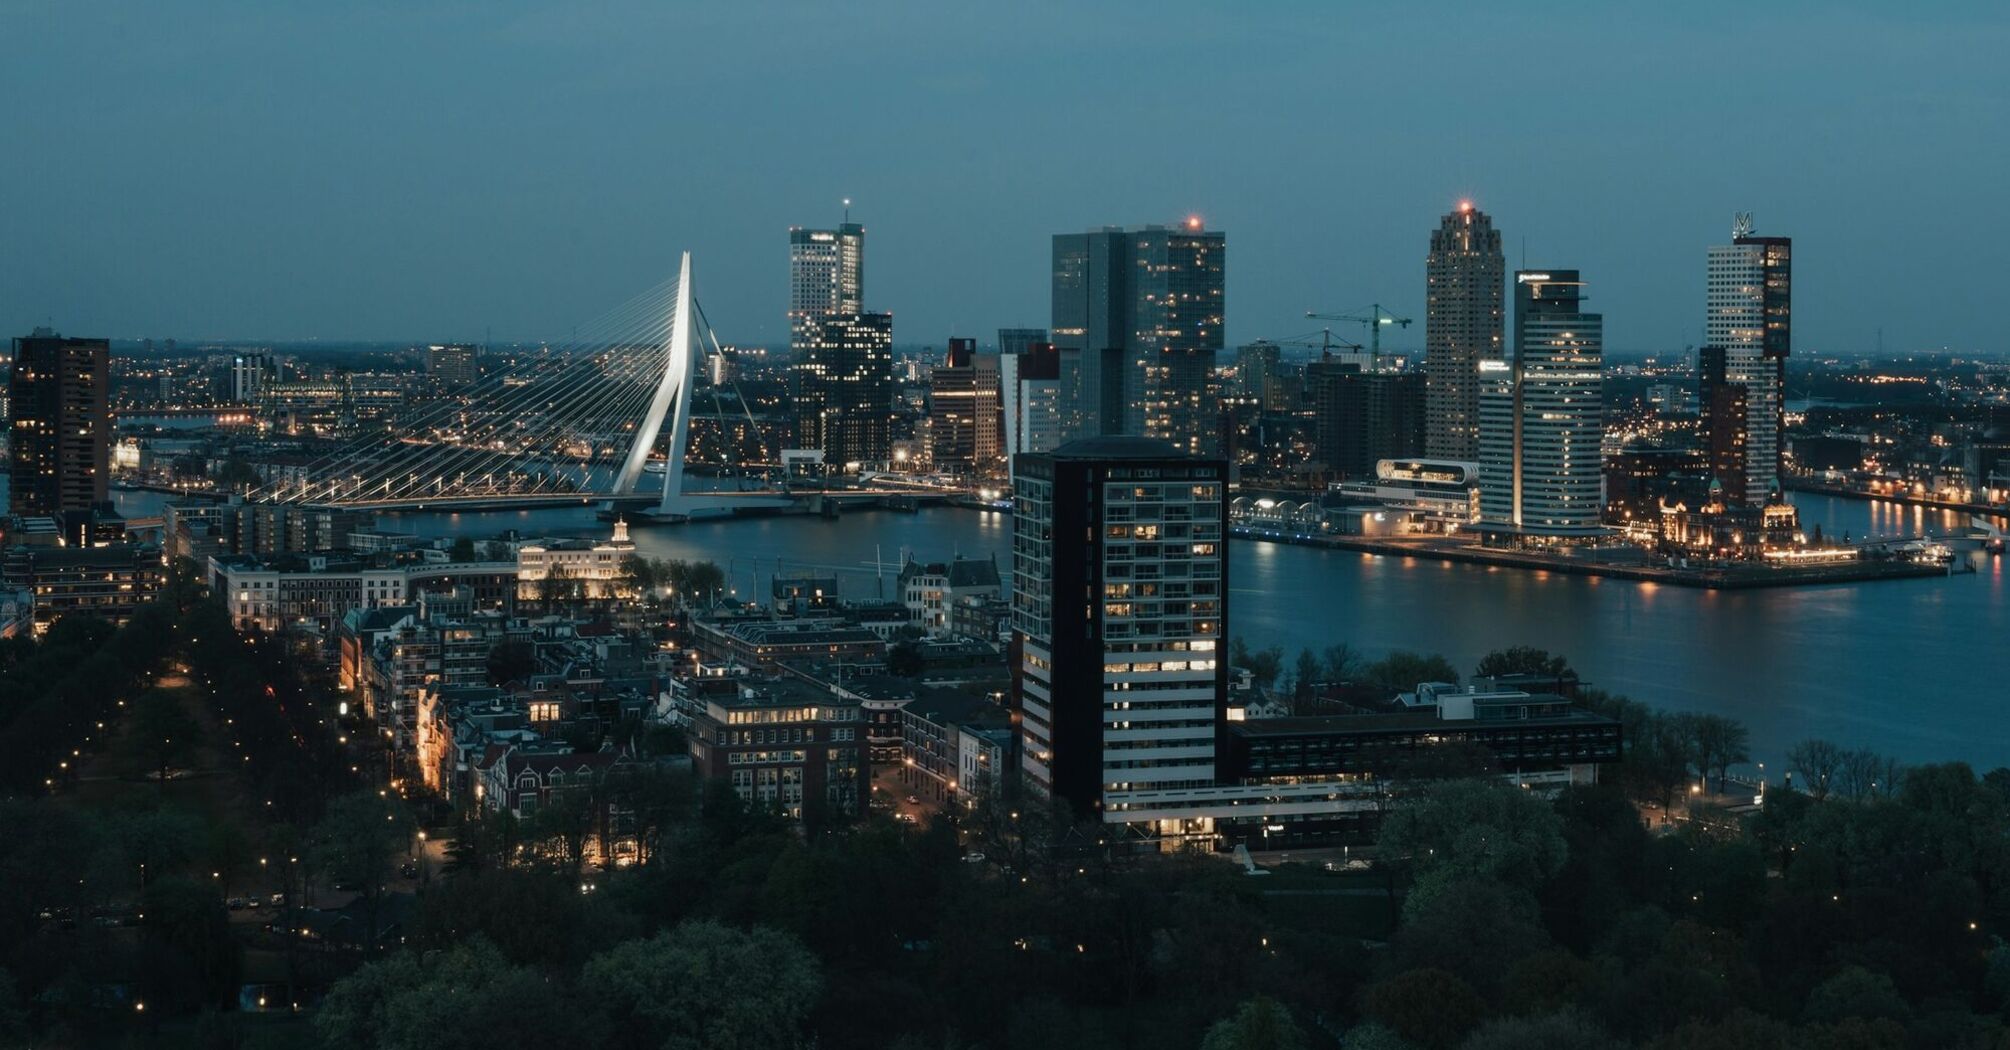 Rotterdam city skyline at night with illuminated buildings and Erasmus Bridge